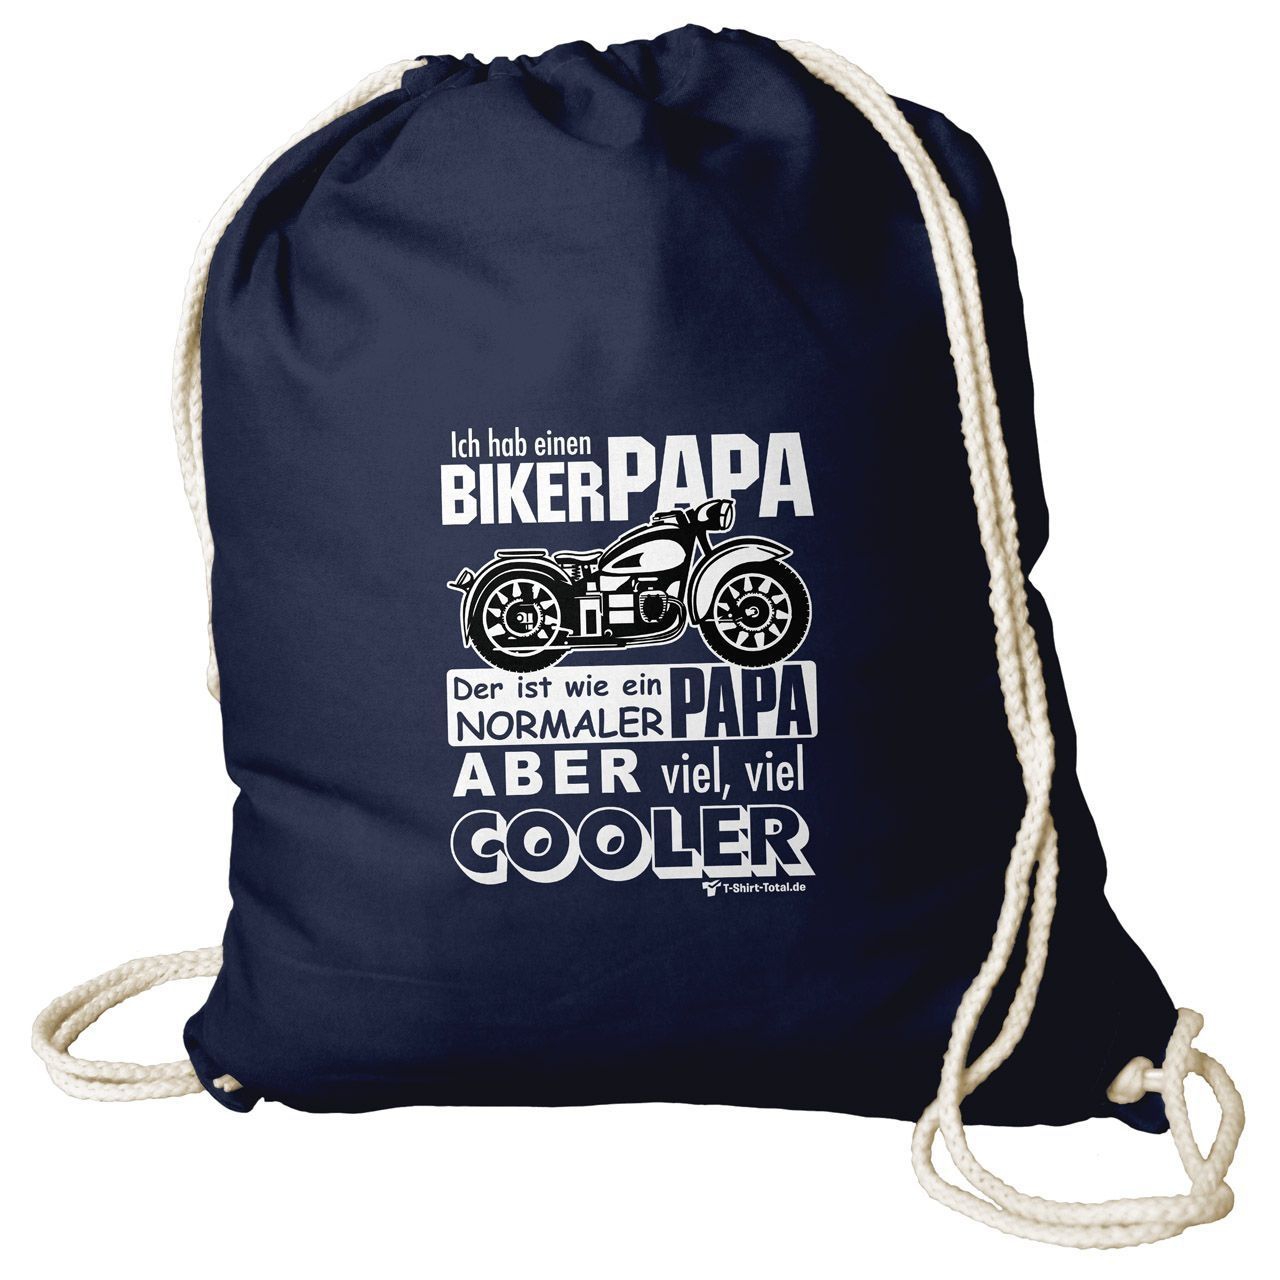 Biker Papa Rucksack Beutel navy